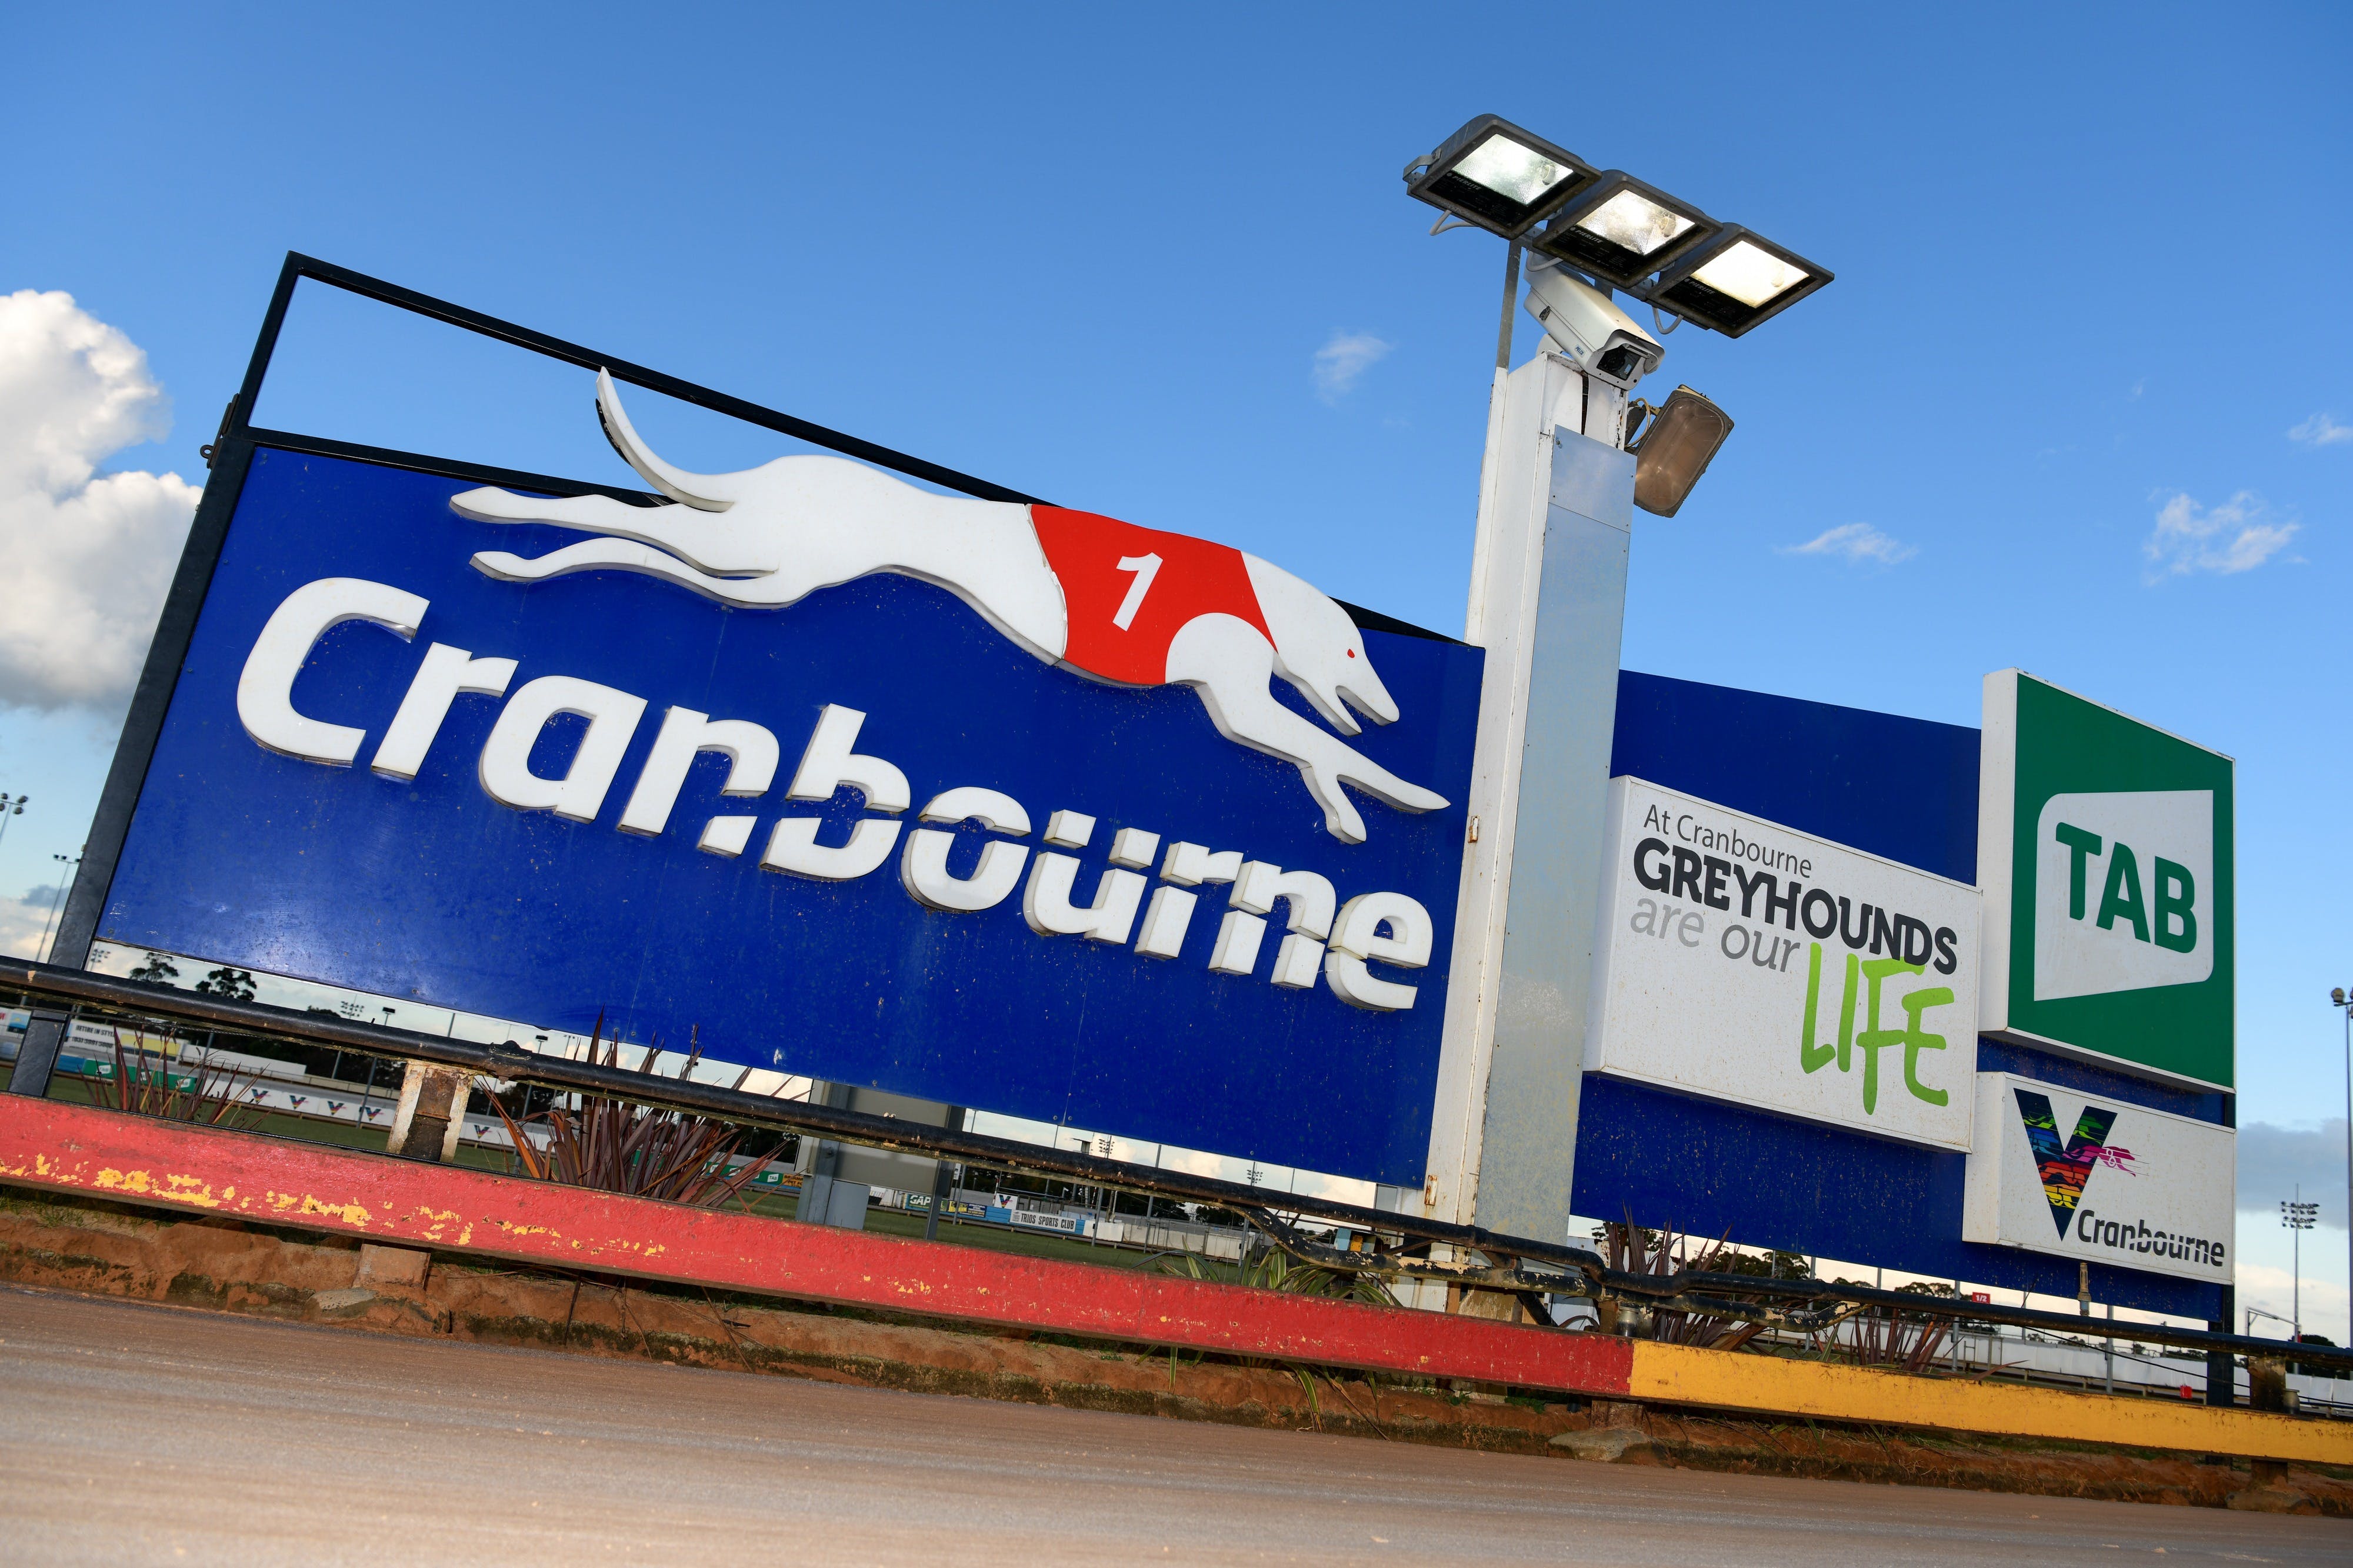 Cranbourne Greyhound Racing Club - WA Accommodation